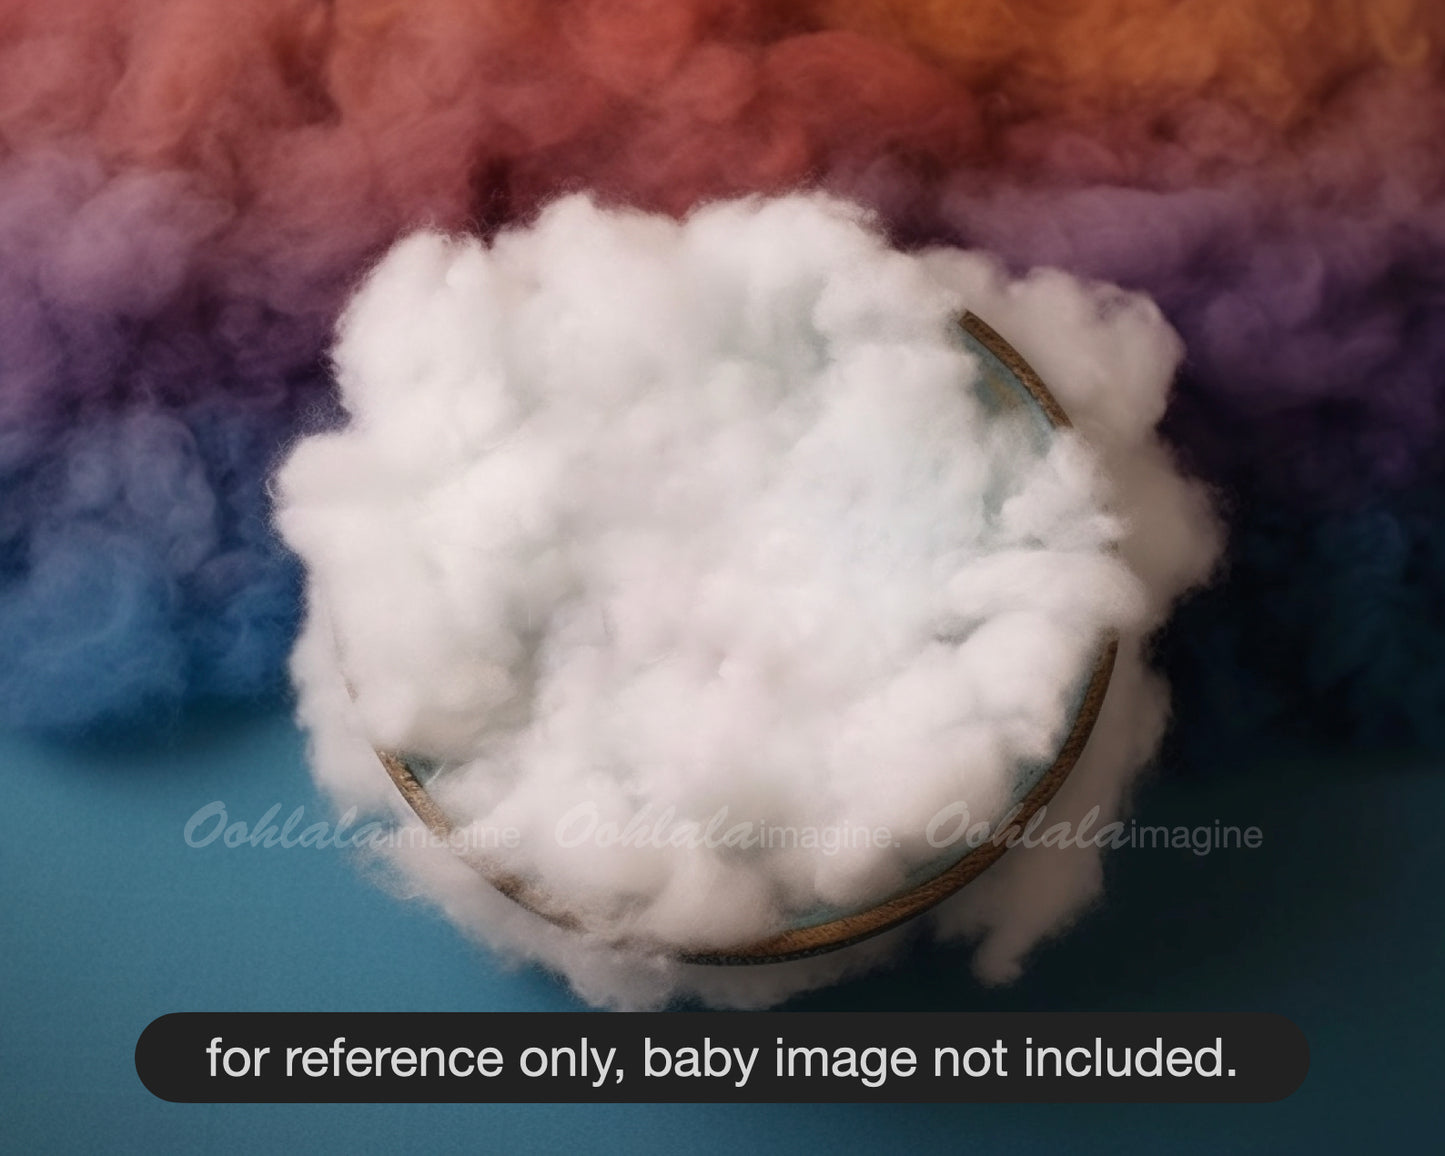 Rainbow Cloud Newborn Digital Backdrop Set of 4